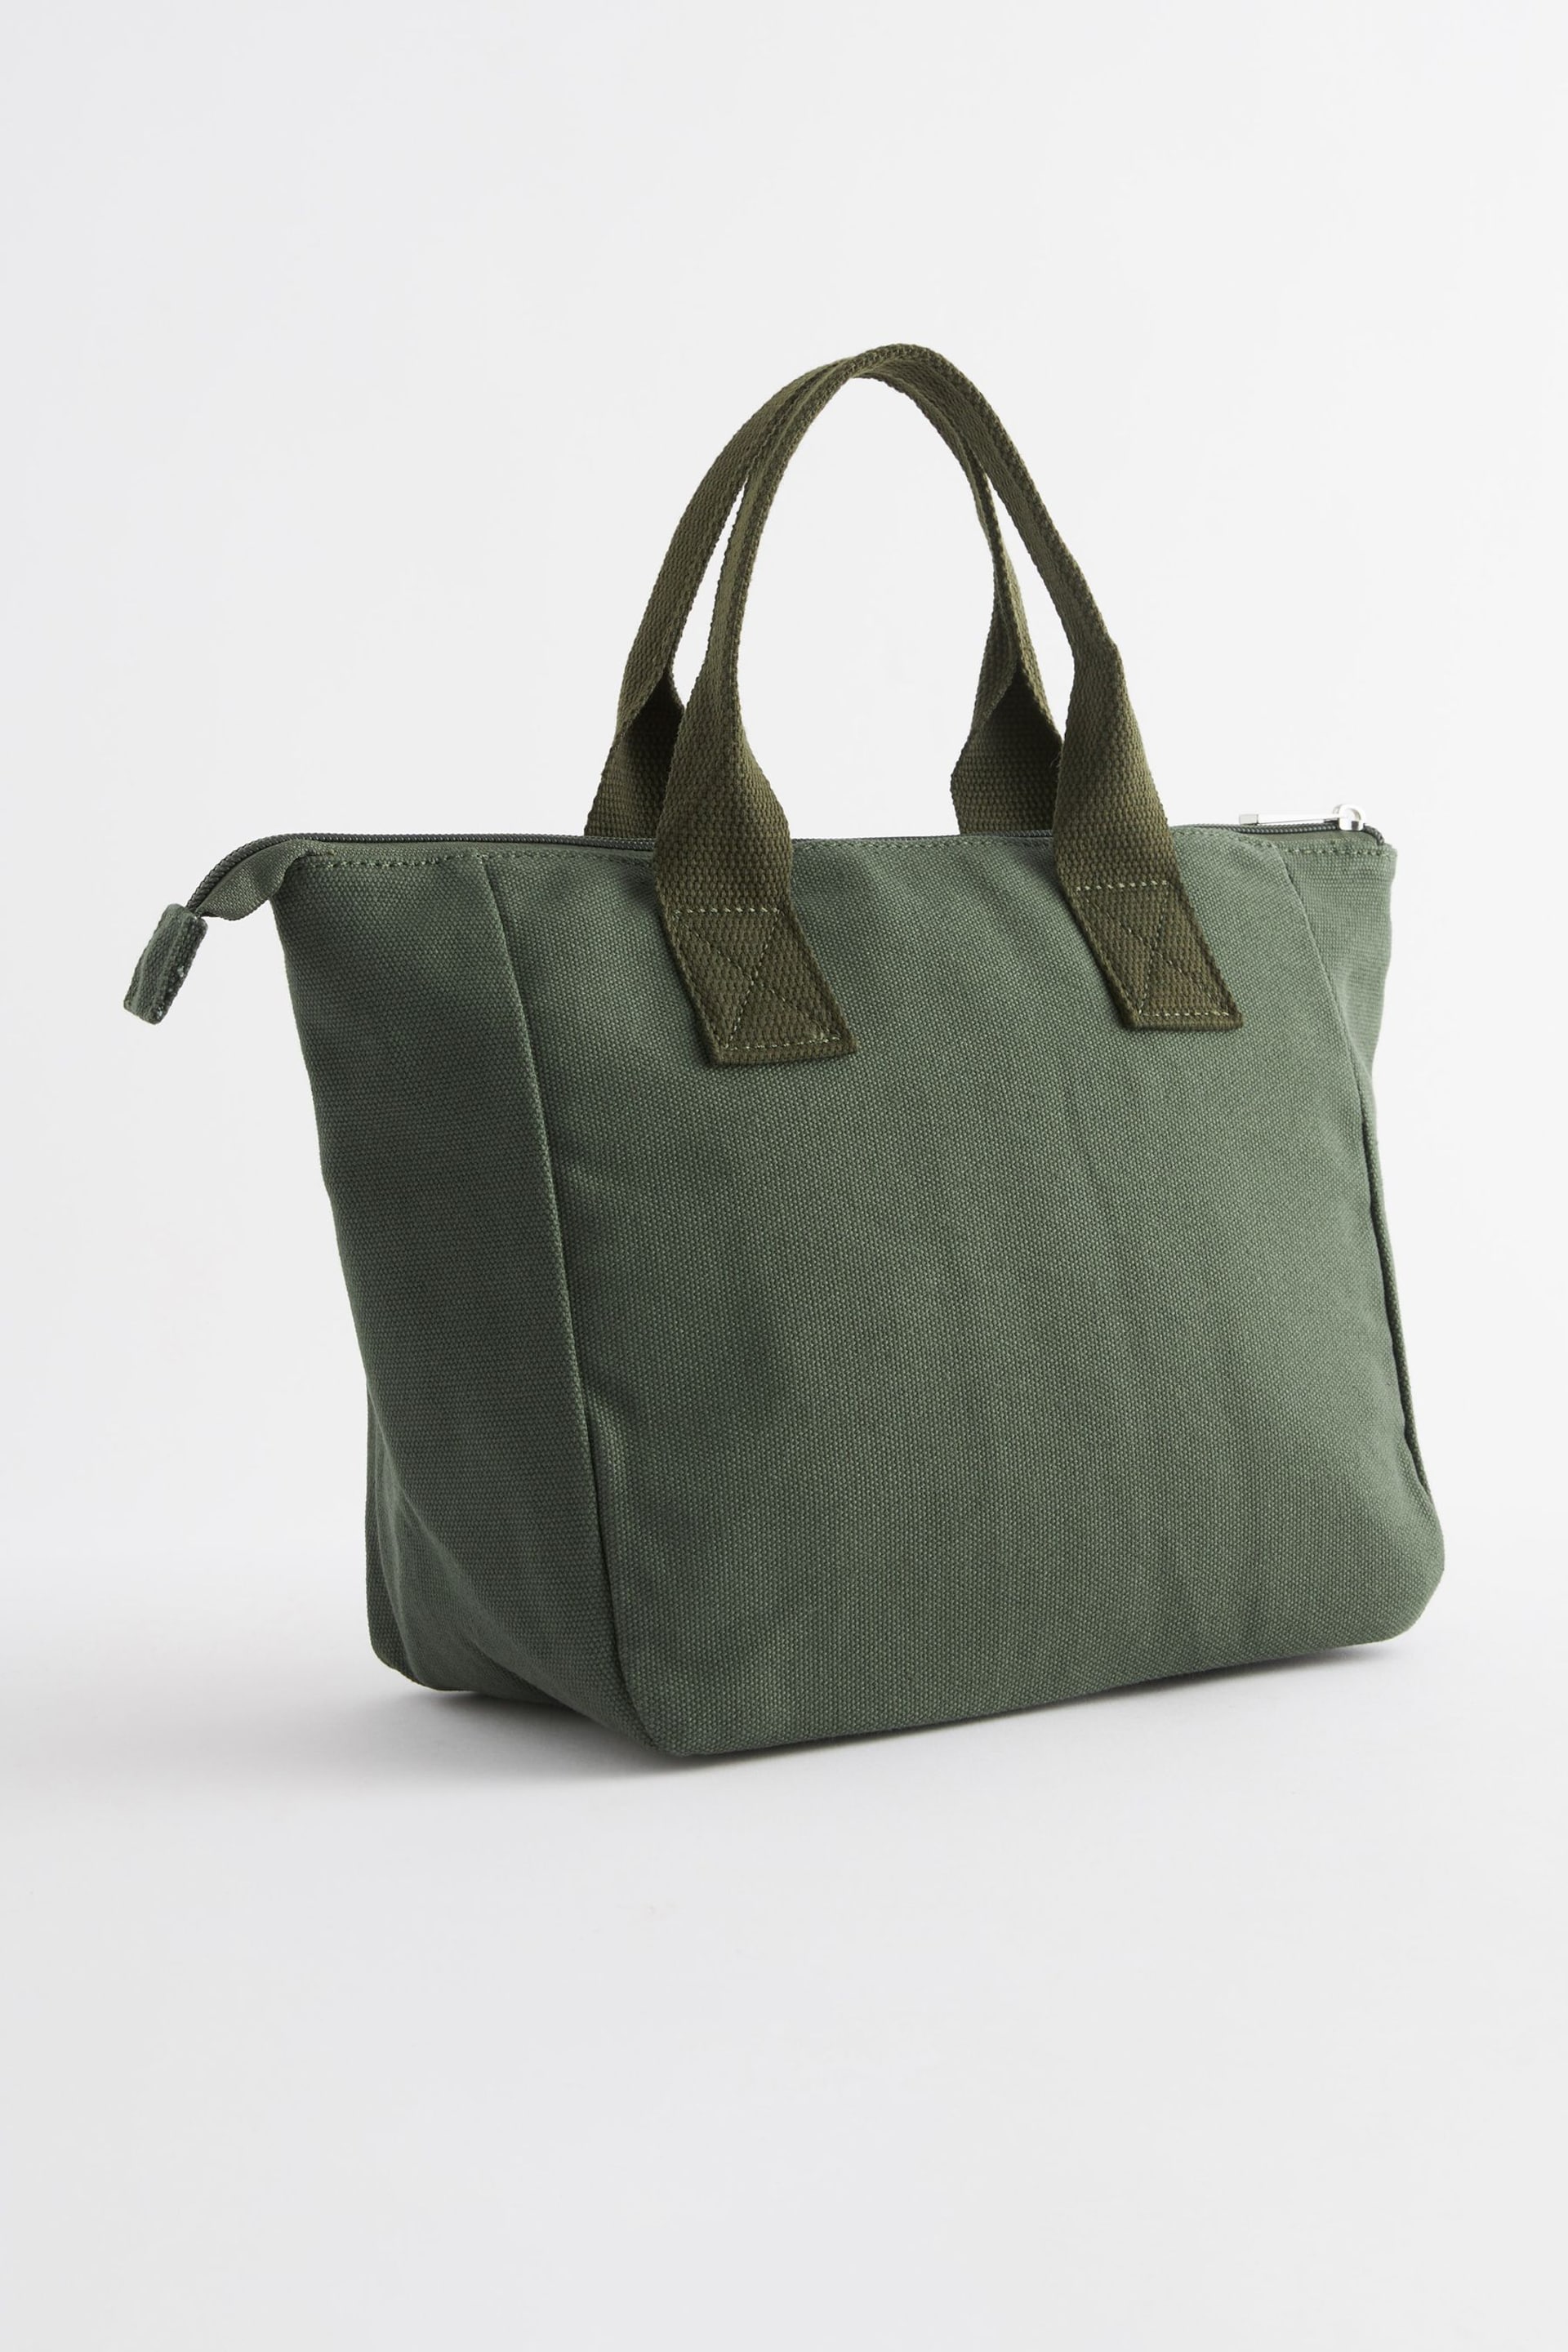 Khaki Green Handheld Lunch Bag - Image 2 of 4